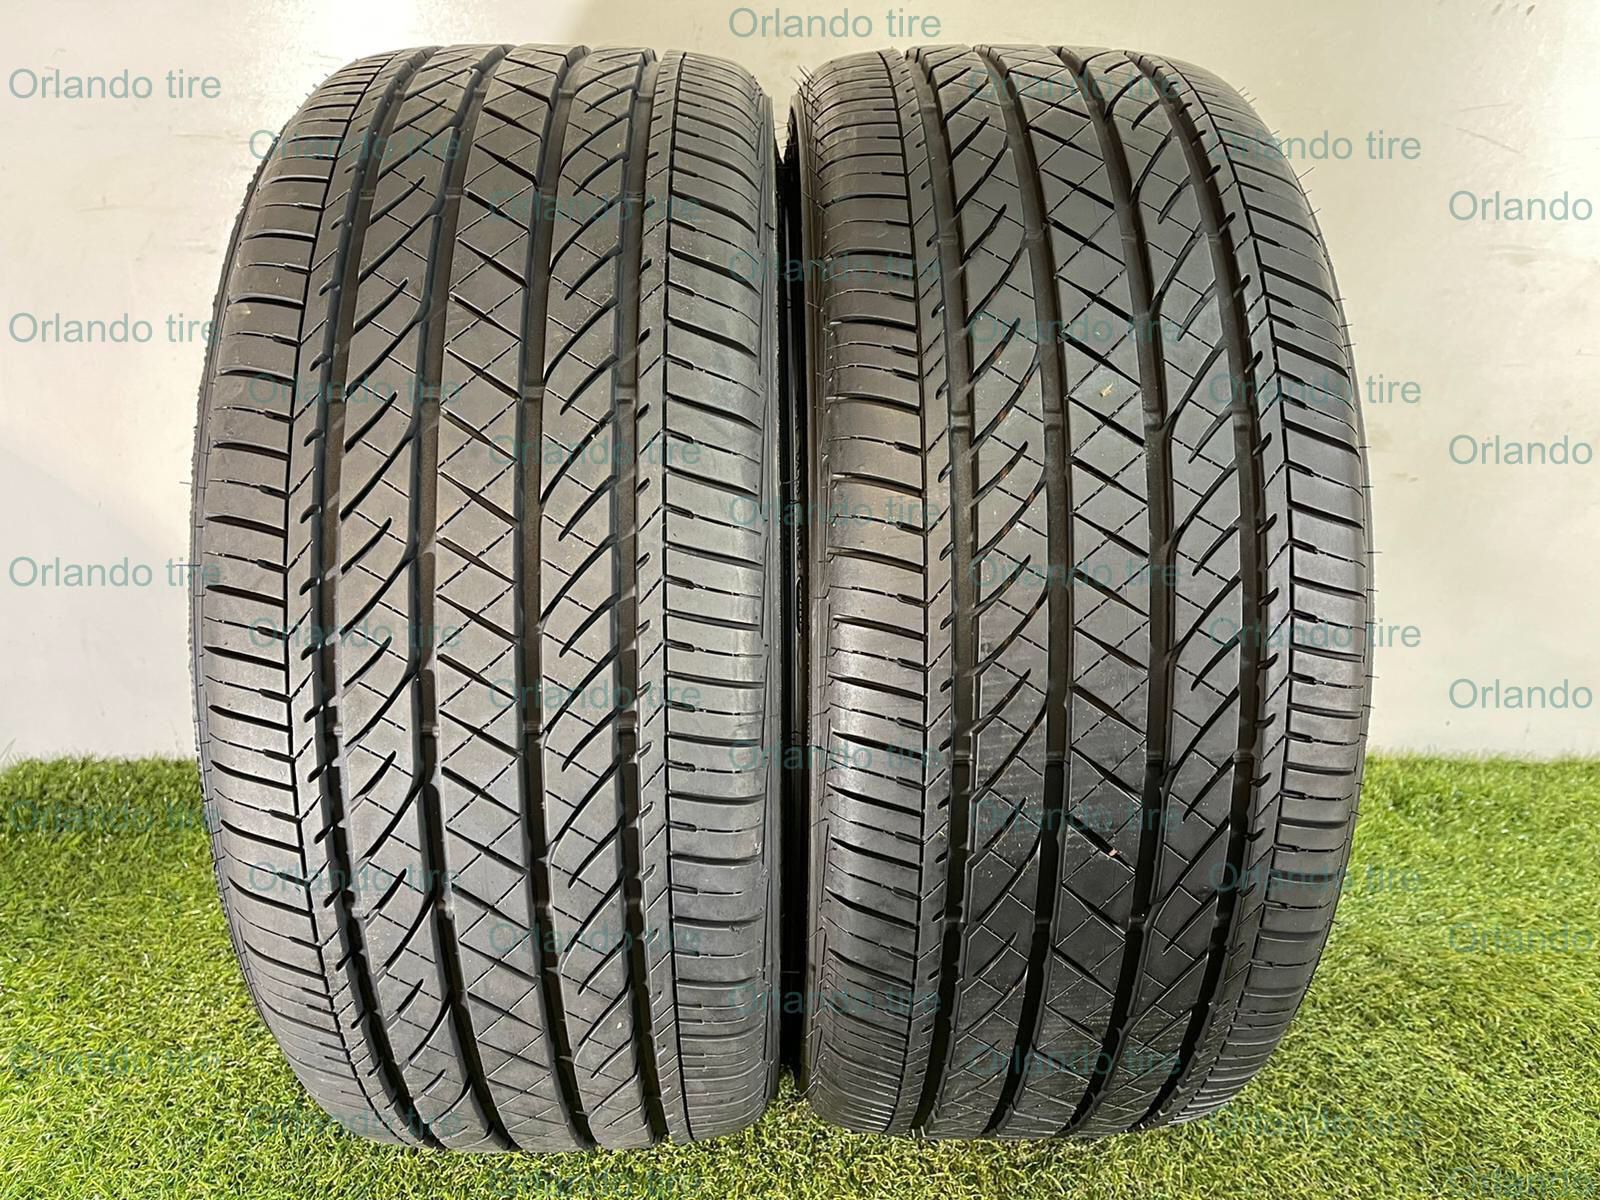 S632  235 40 19 92V  Bridgestone Turanza EL440 - 2 Used Tires 80% Life 